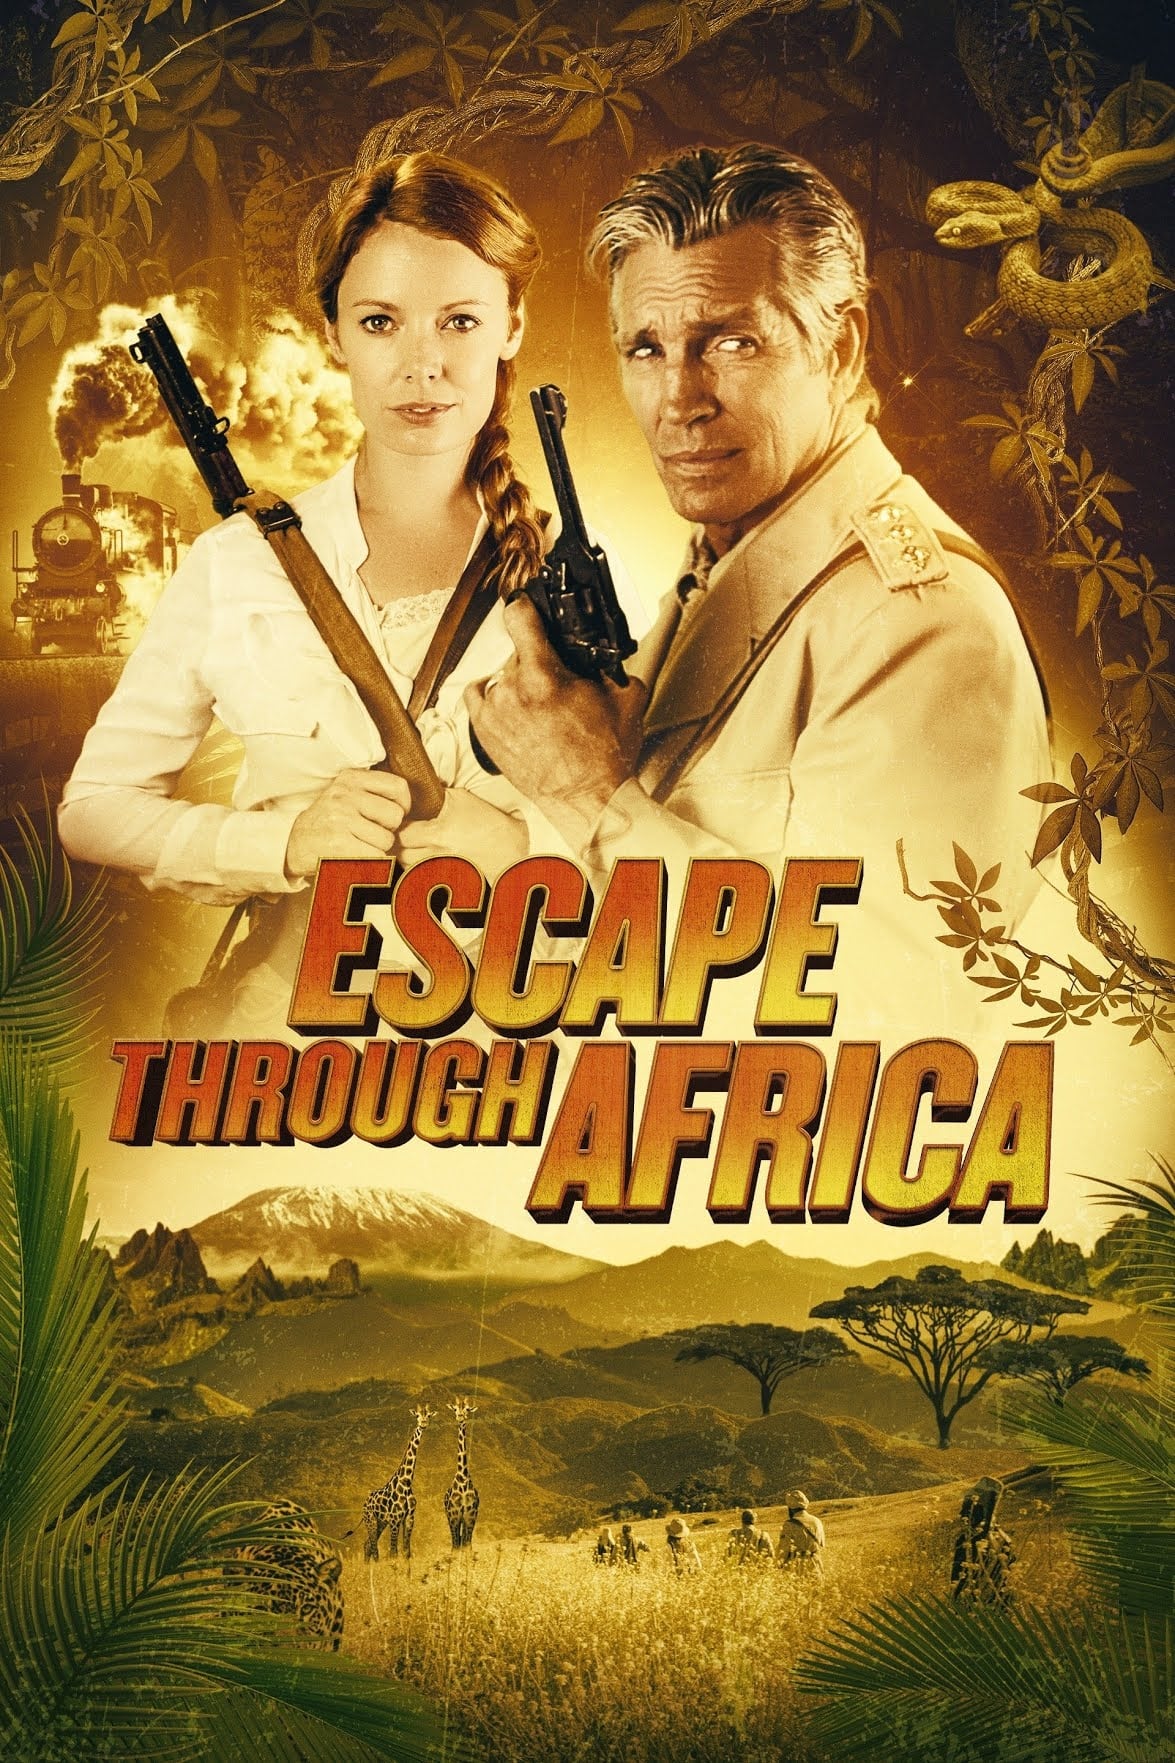 Banner Phim Trốn Thoát Qua Châu Phi (Escape Through Africa)